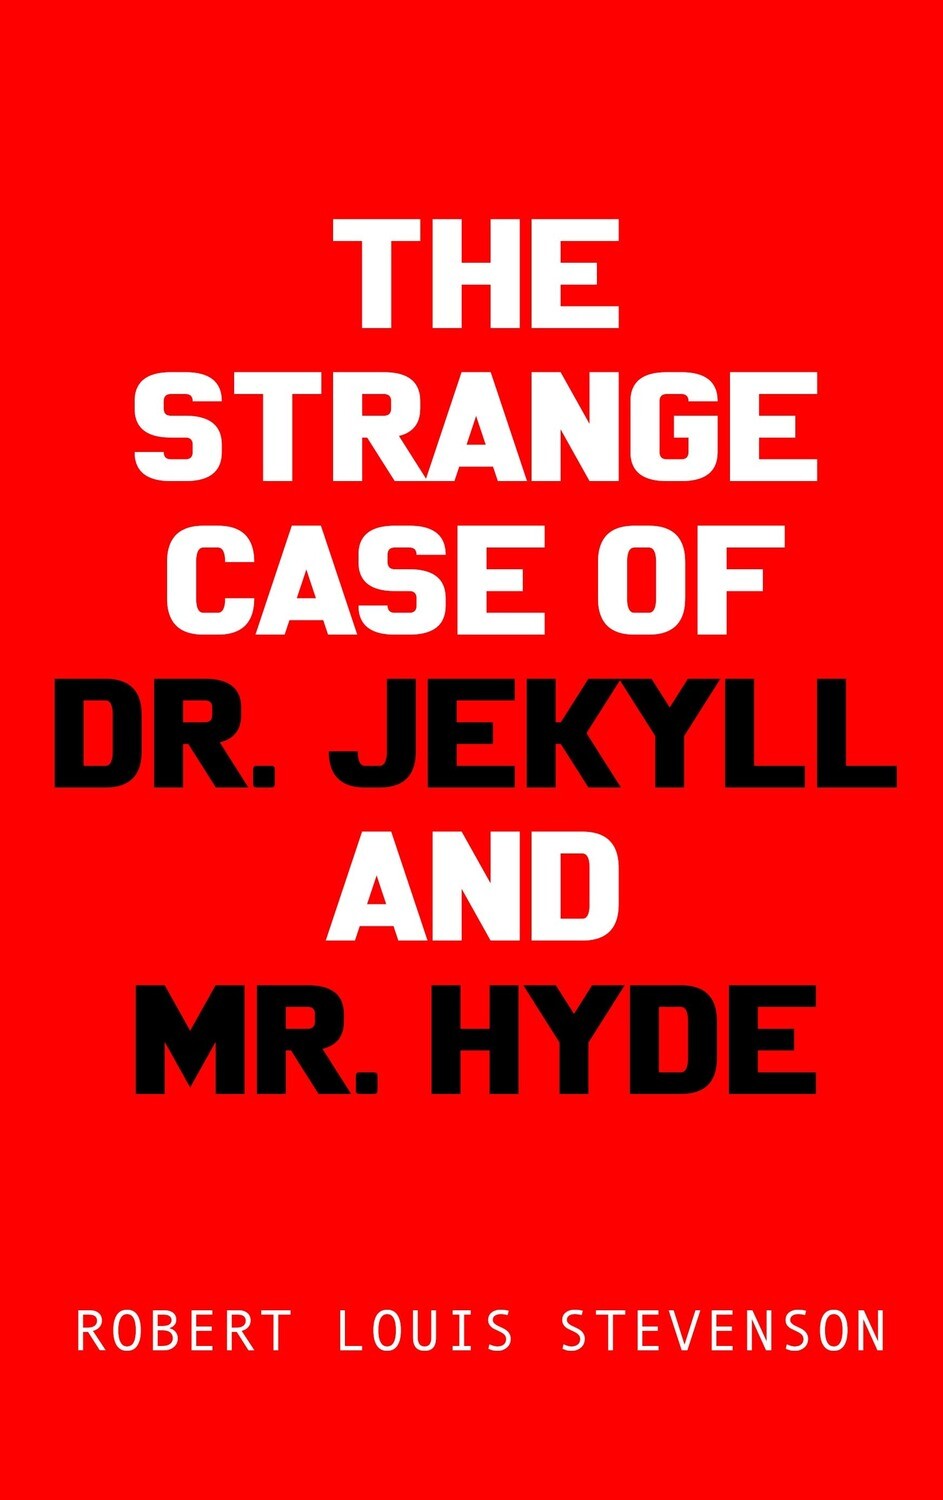 The Strange Case of Dr. Jekyll and Mr. Hyde by Robert Louis Stevenson - Digital Book [INSTANT DIGITAL DOWNLOAD]